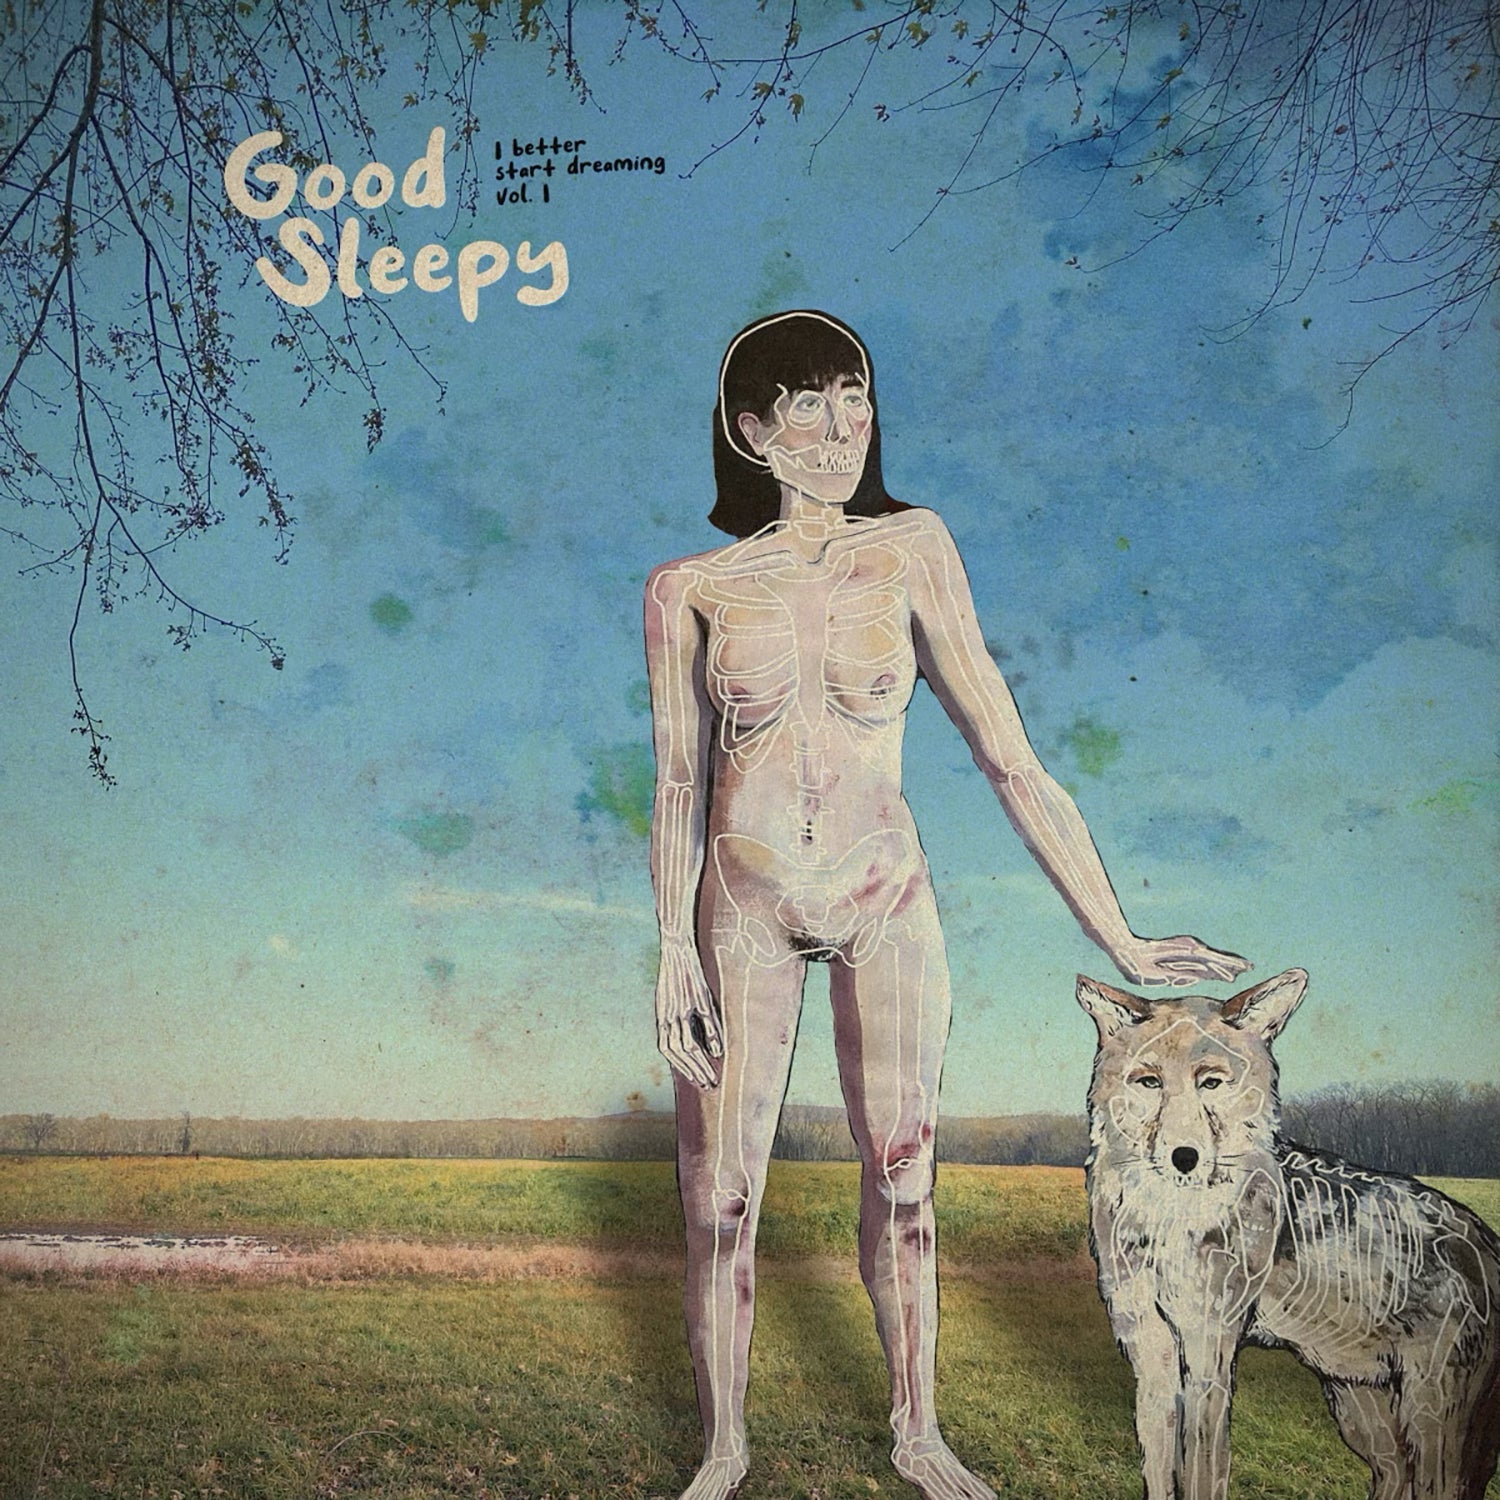 i better start dreaming, vol 1 - NO SLEEP RECORDS - Good Sleepy